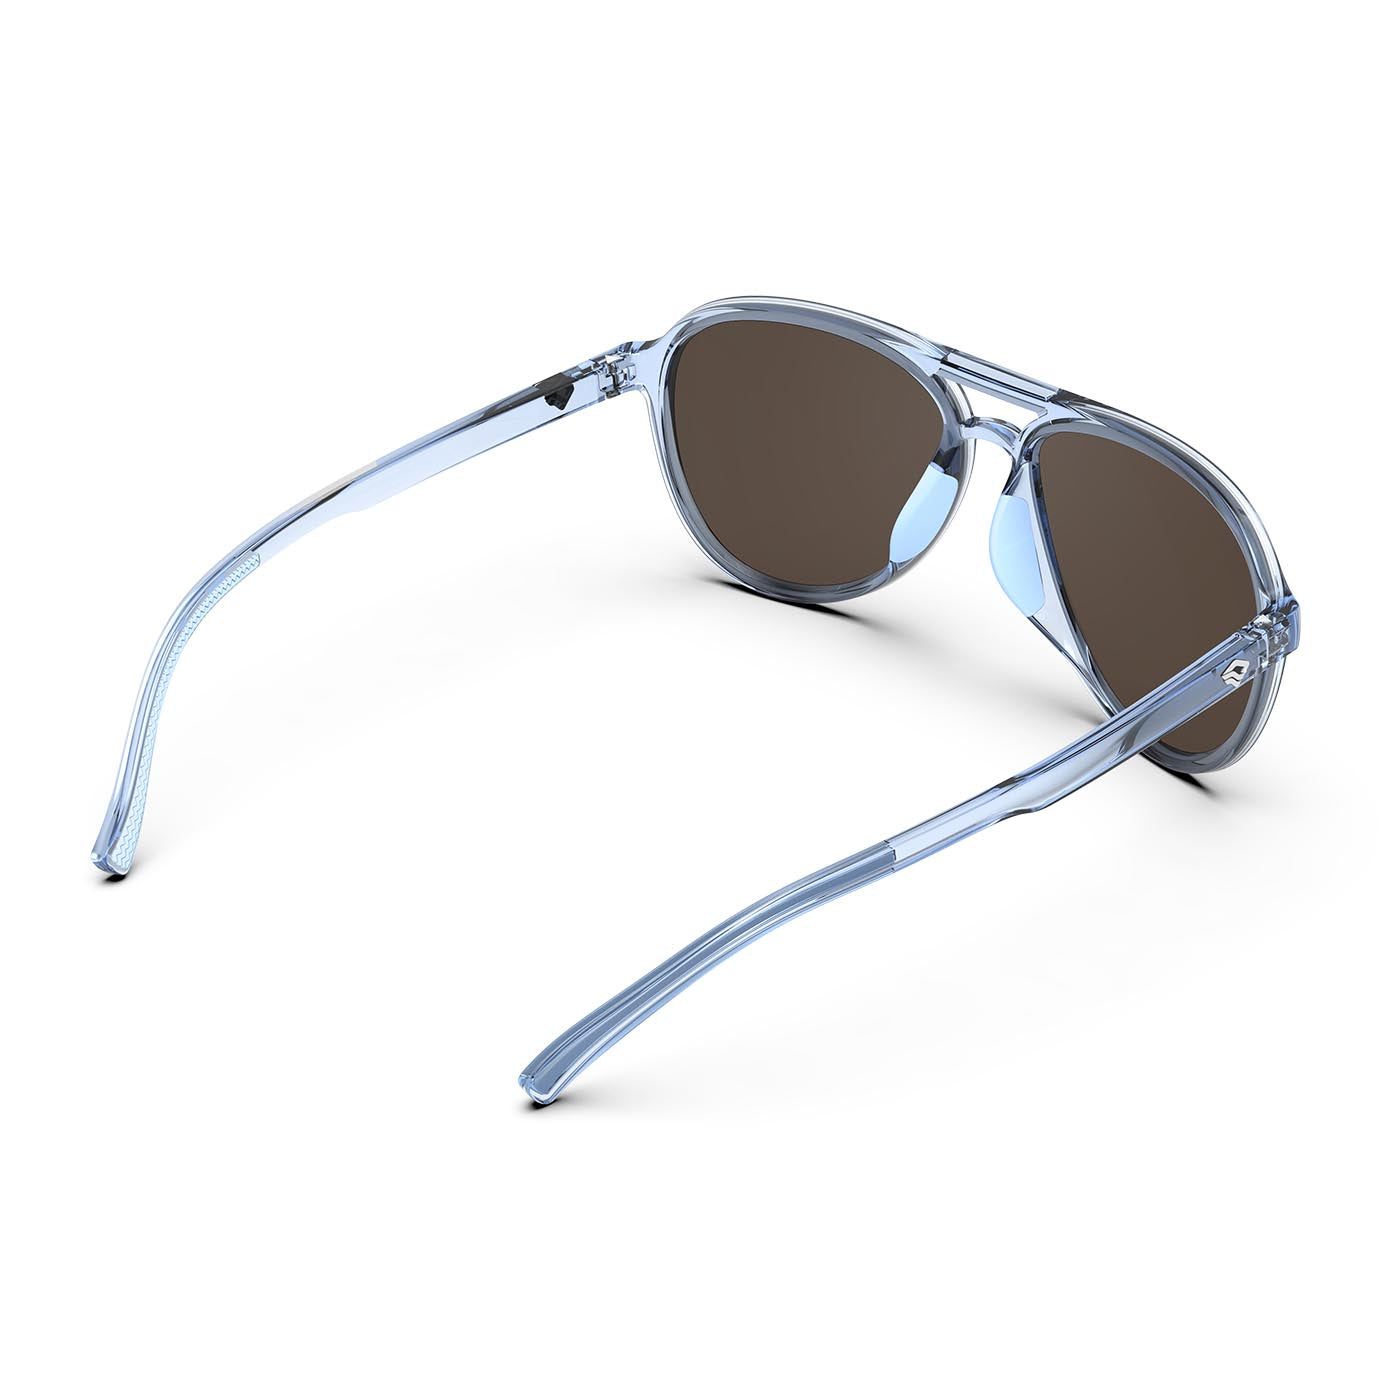 TBS015 pilot-frame sunglasses | Thom Browne